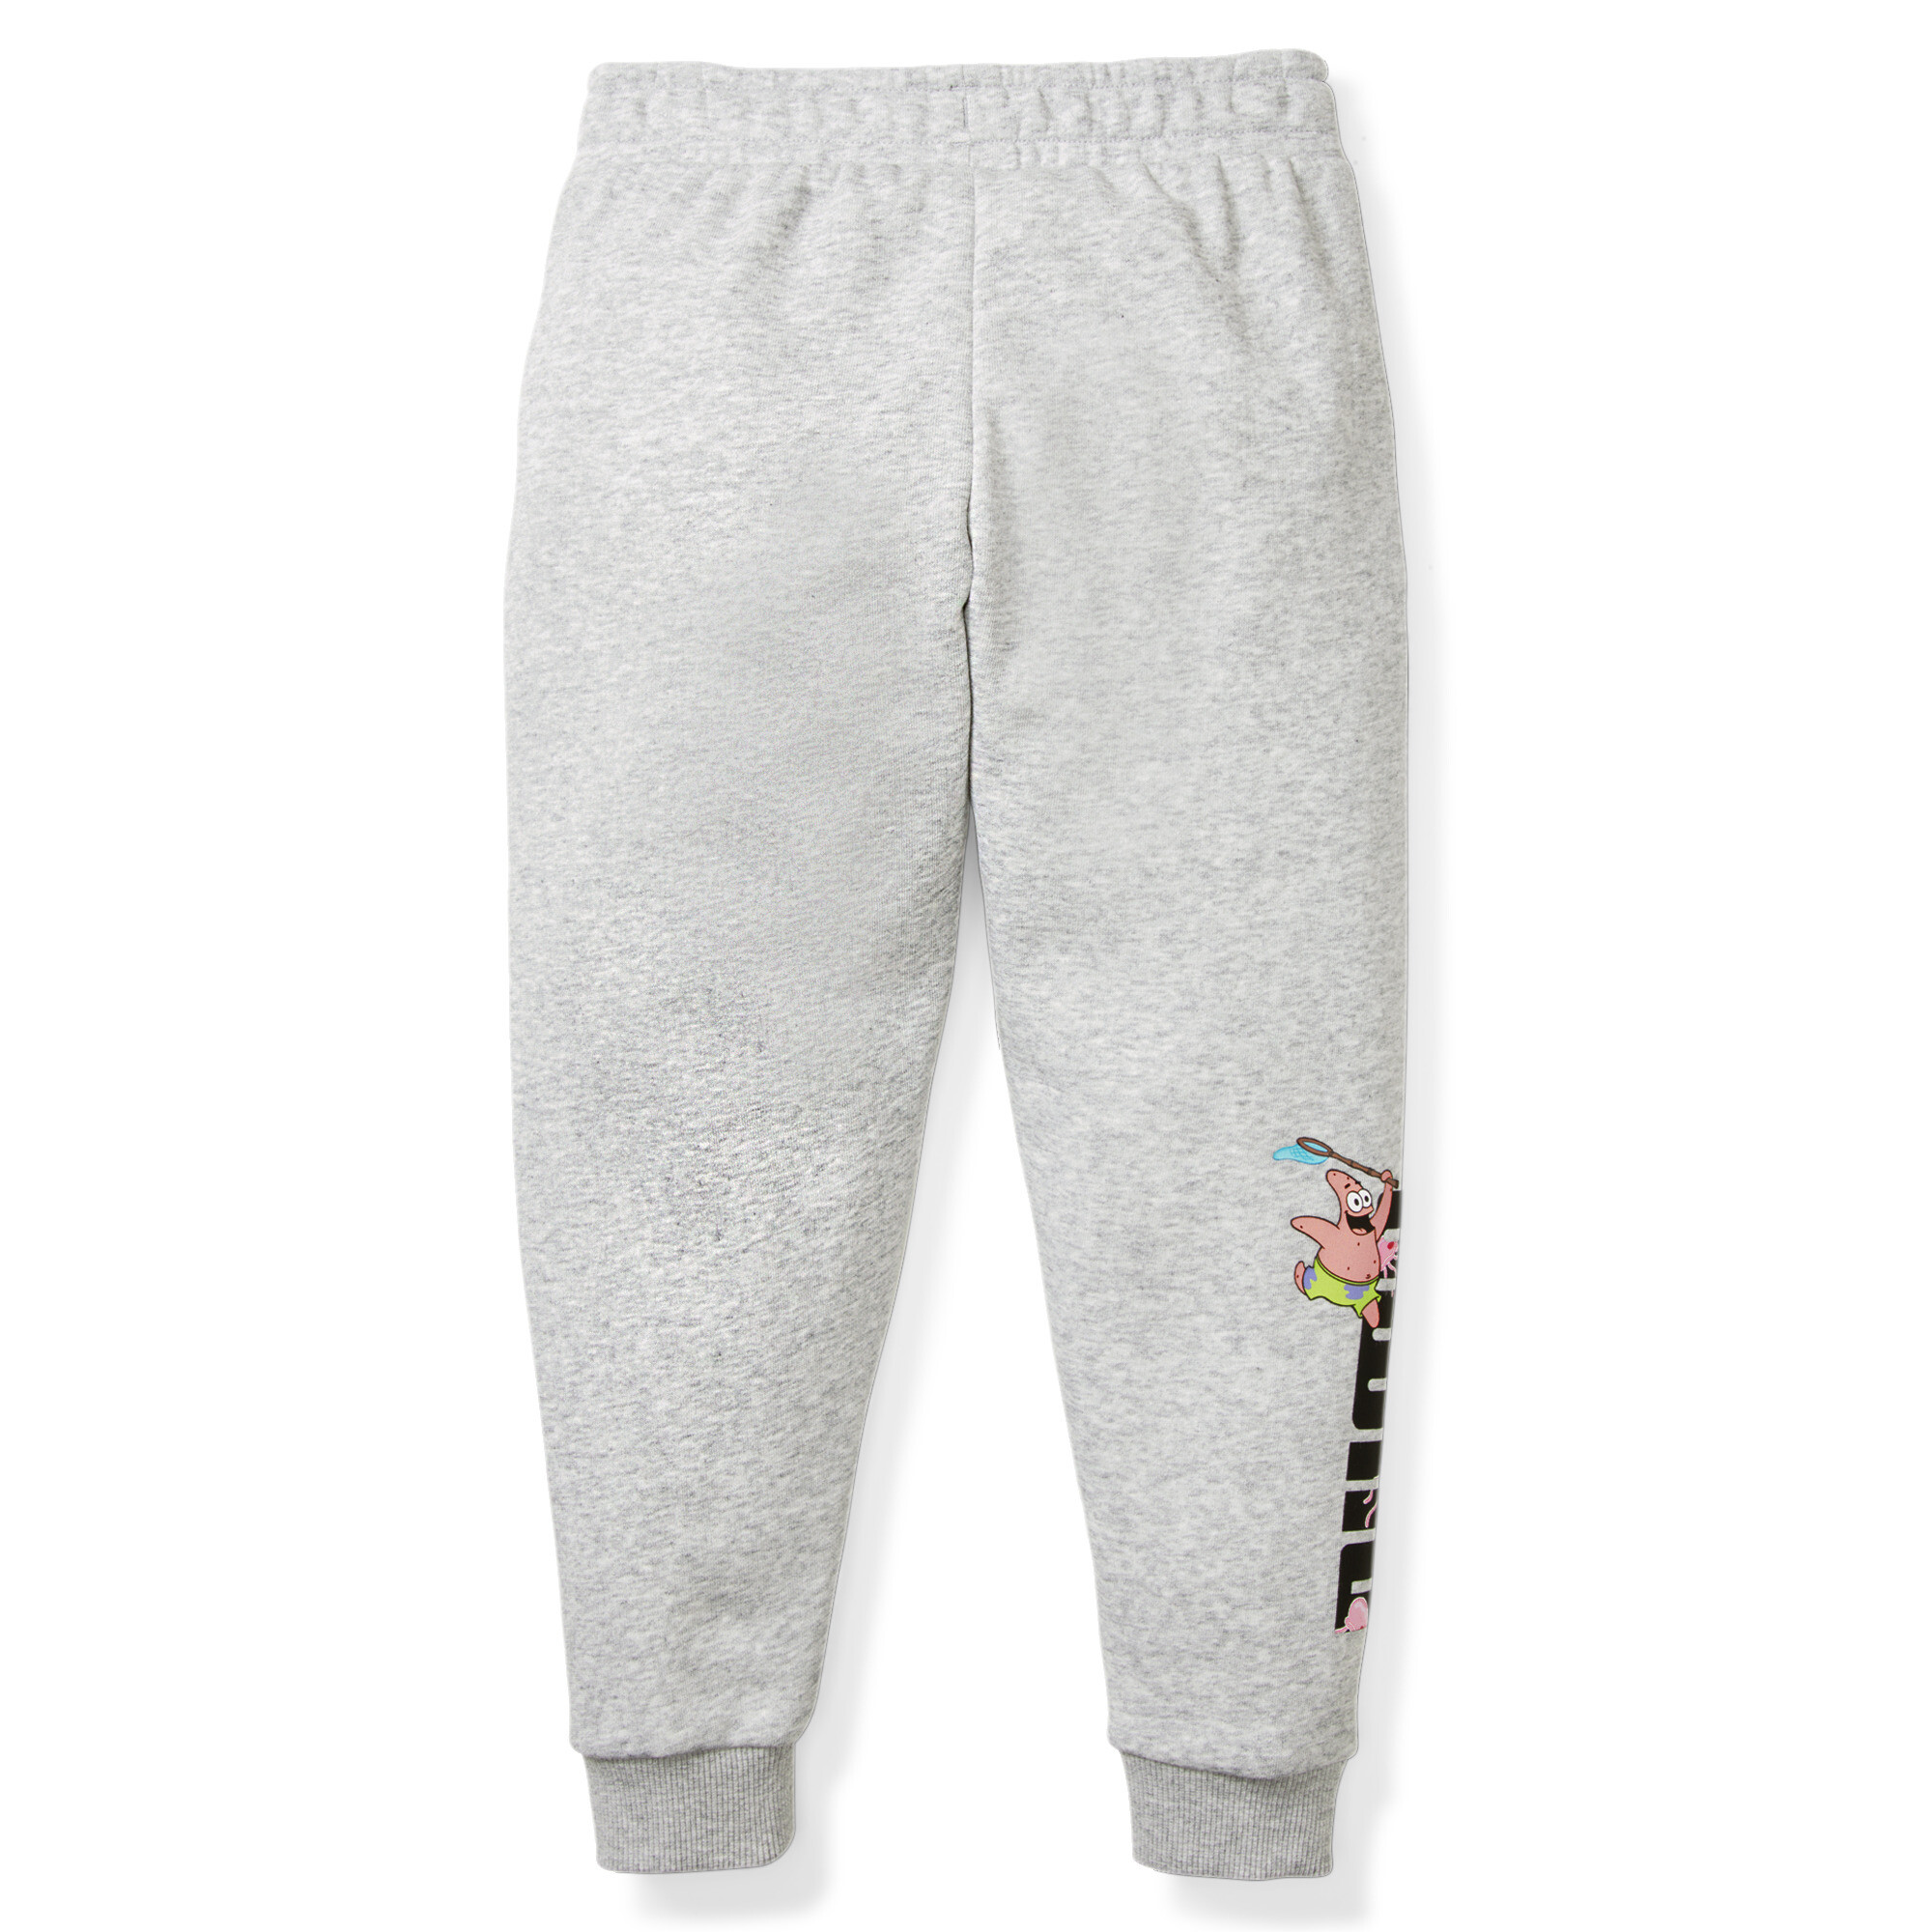 Puma X SPONGEBOB Sweatpants Kids, Gray, Size 11-12Y, Clothing